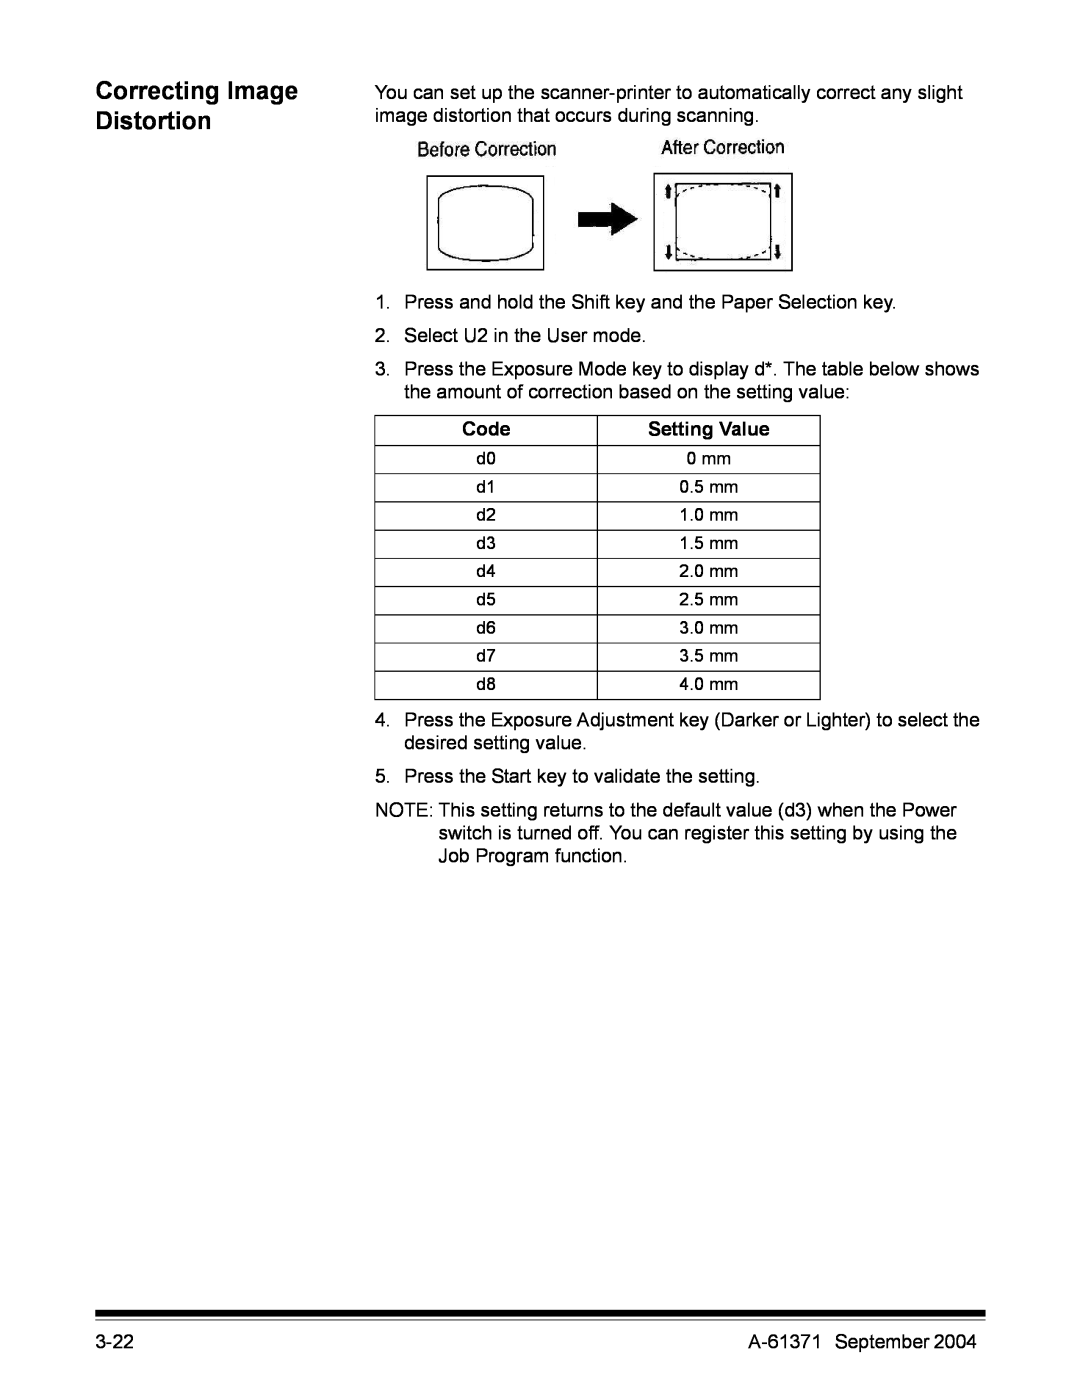 Kodak 3000DSV-E manual Correcting Image Distortion, Code, Setting Value 